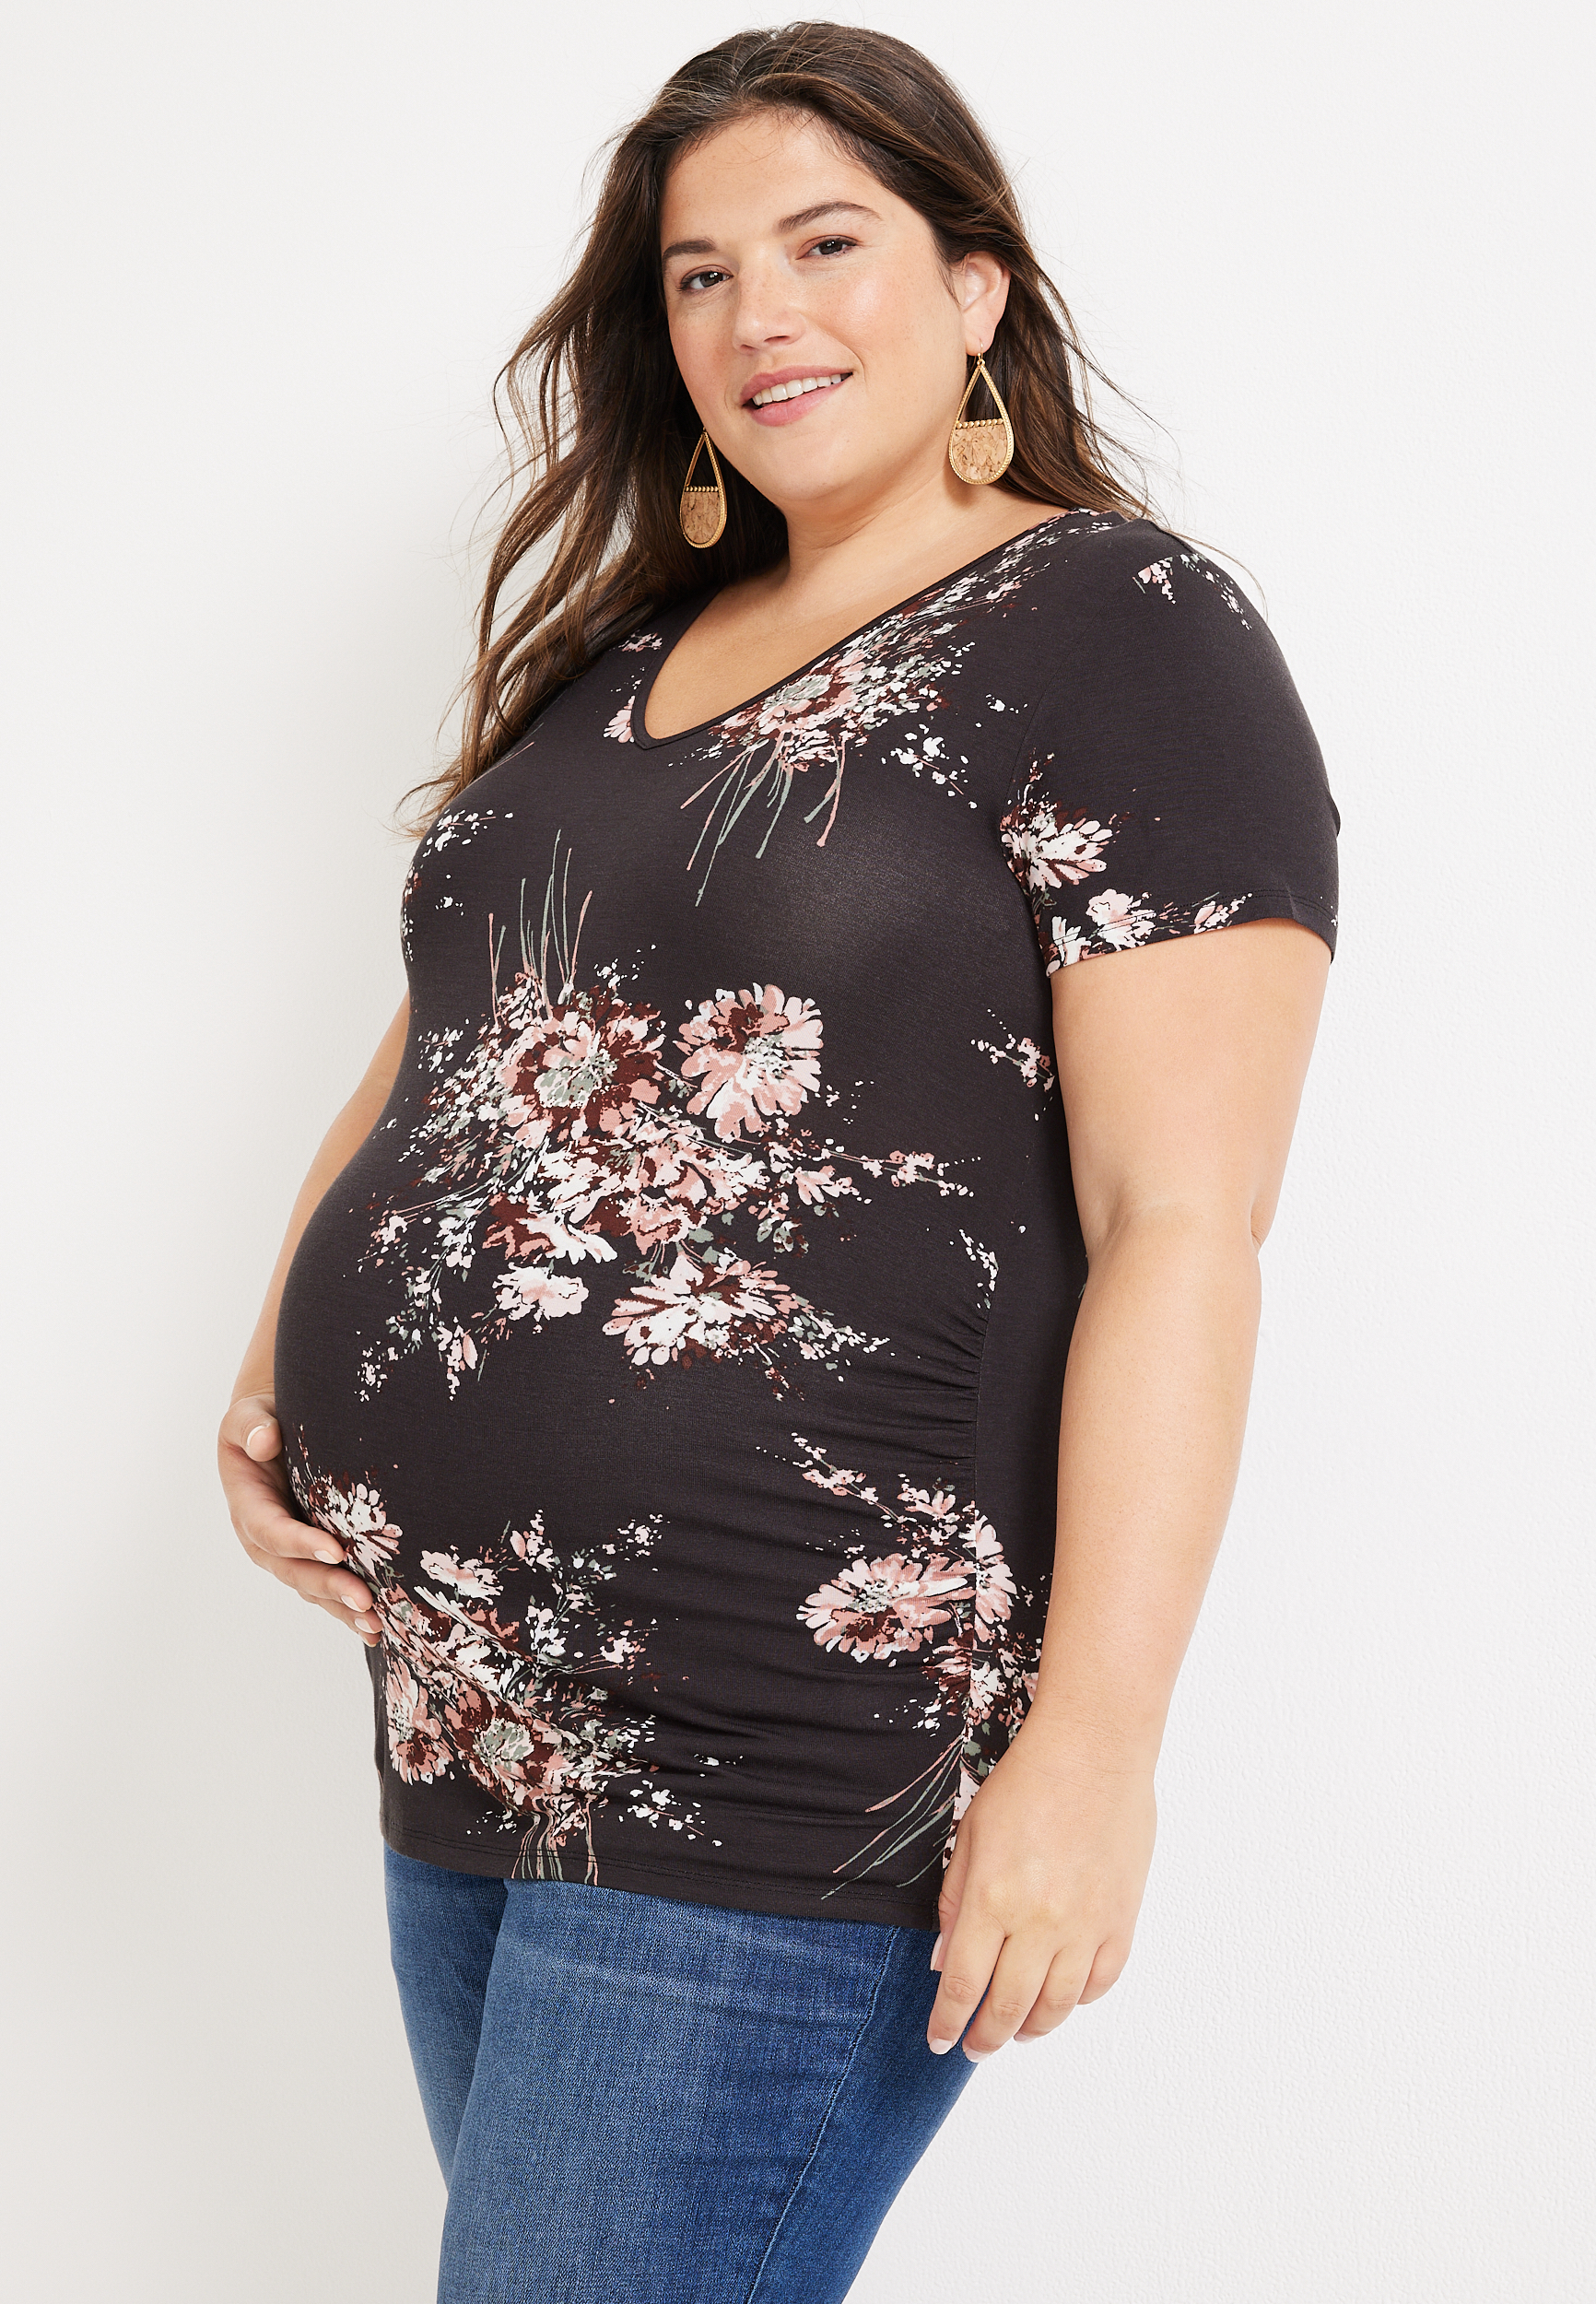 Plus Size Maternity Tops  Pregnancy & Nursing Shirts & Tops